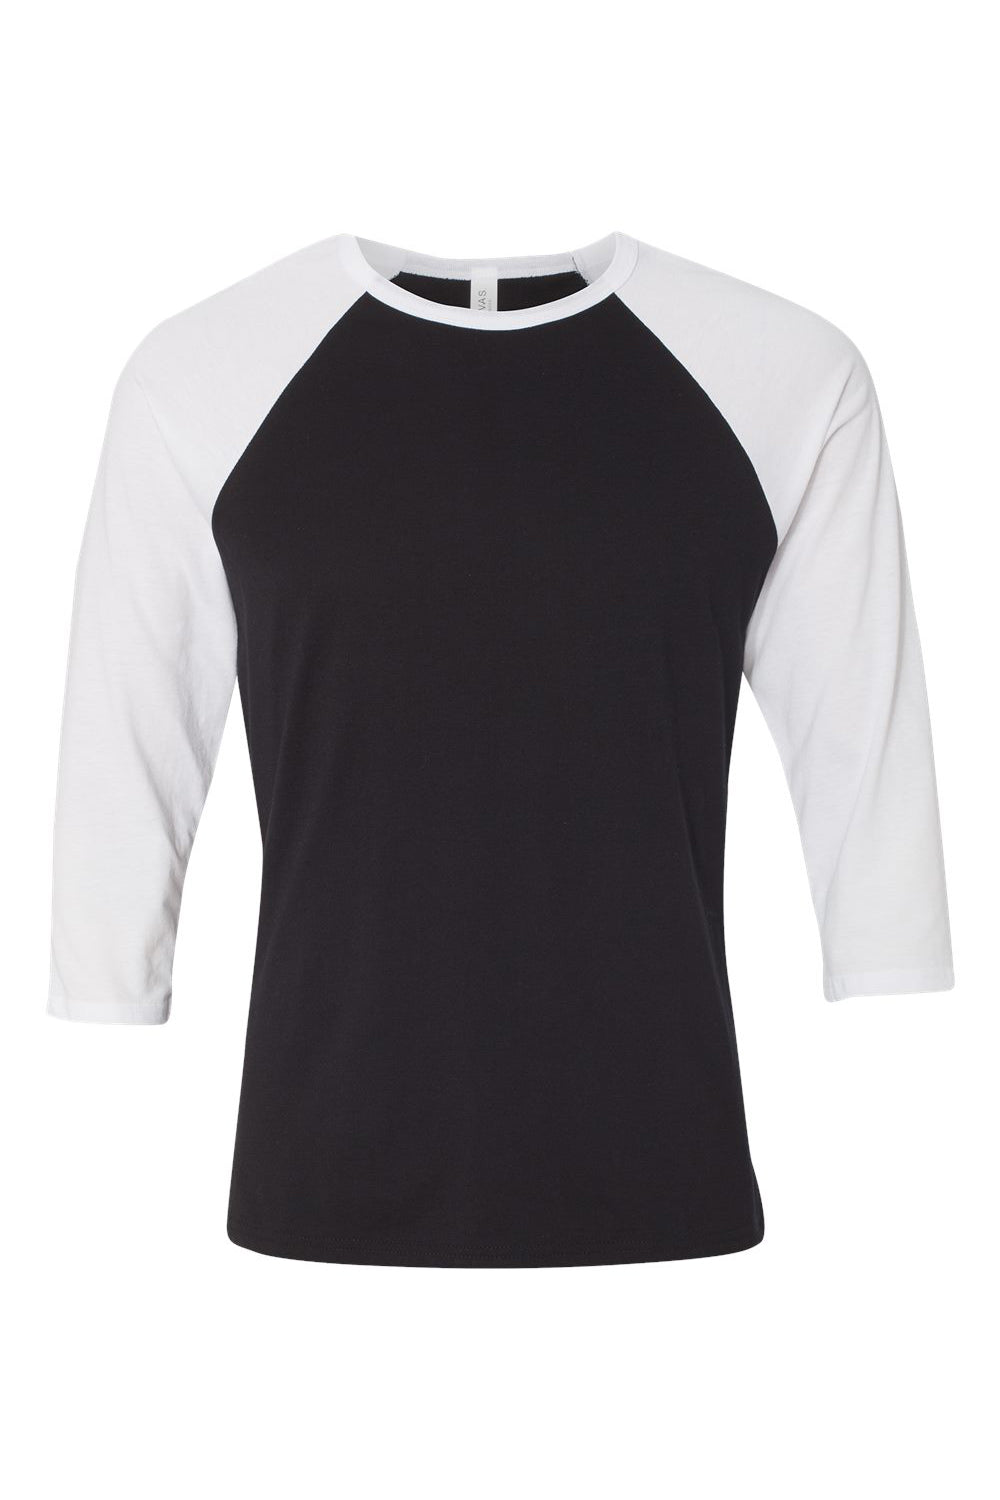 Bella + Canvas BC3200/3200 Mens 3/4 Sleeve Crewneck T-Shirt Black/White Flat Front